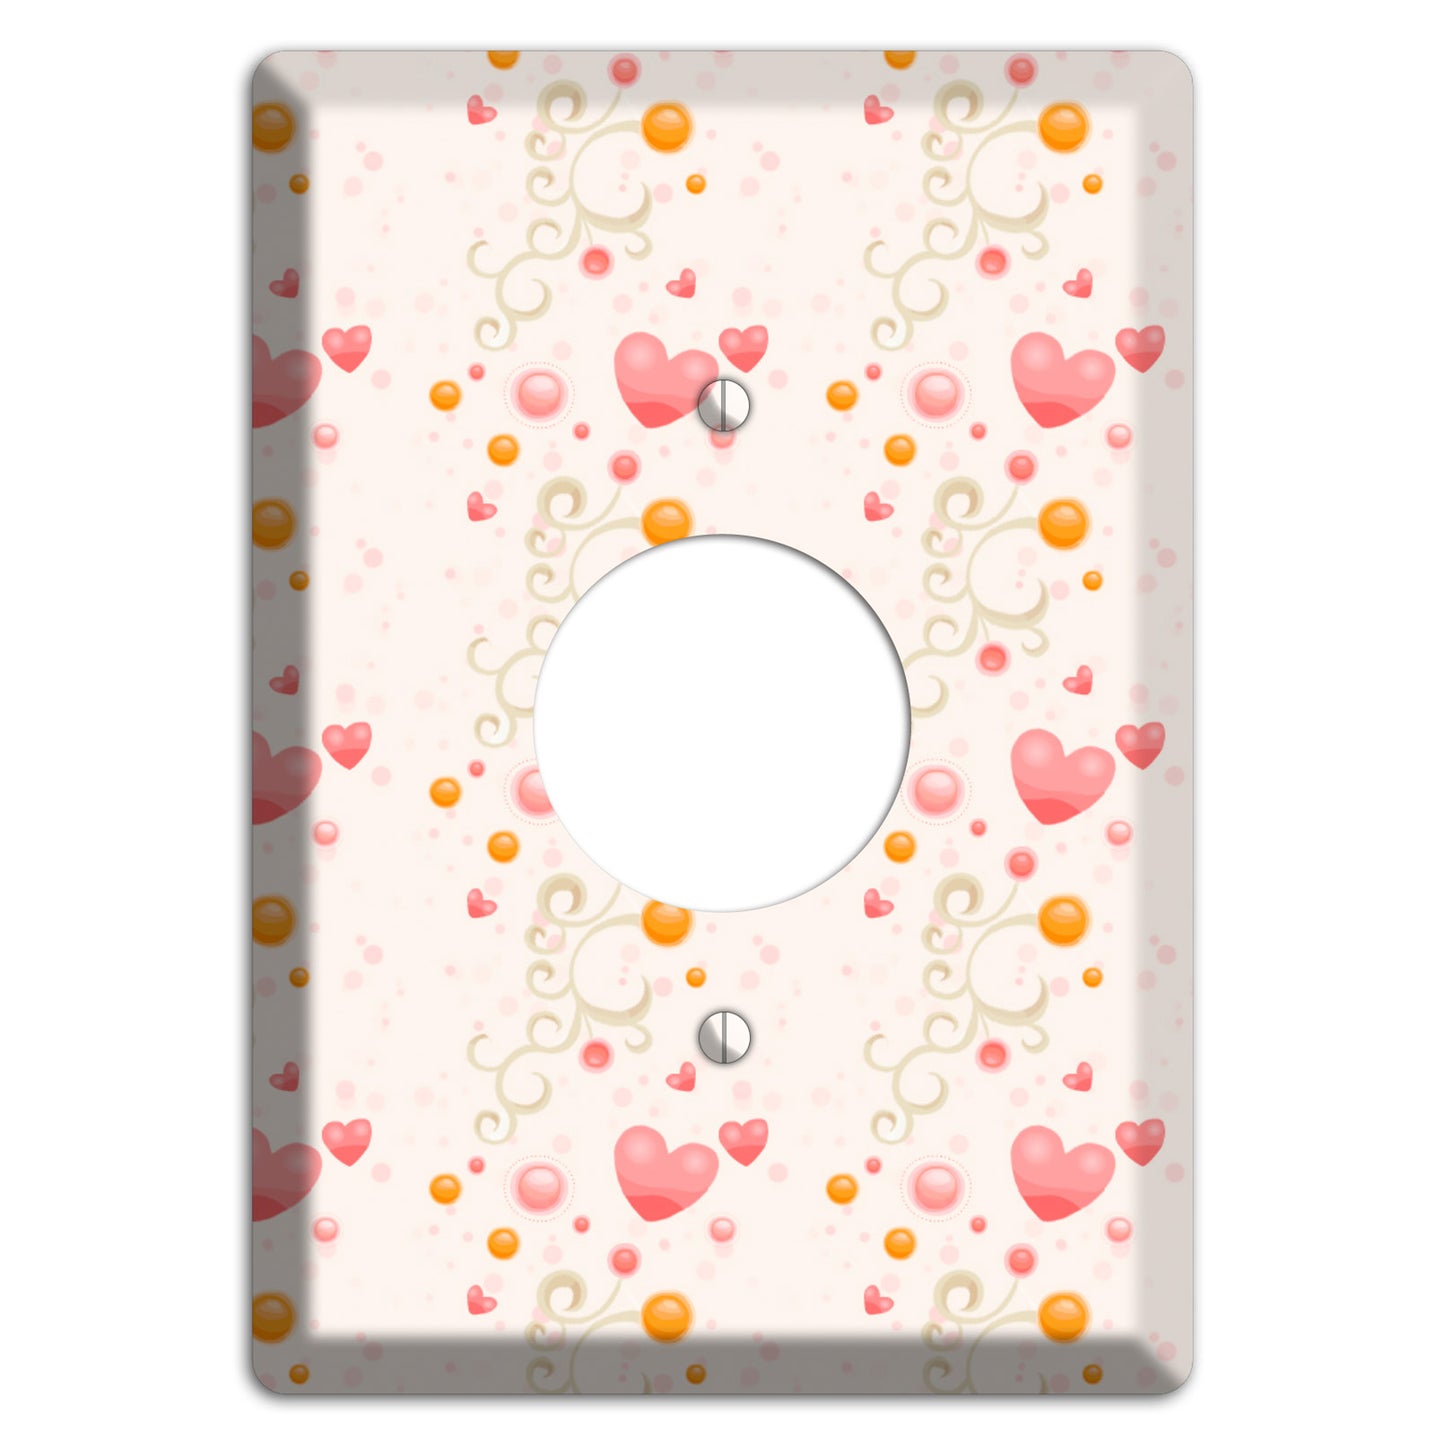 Bubbly Hearts Single Receptacle Wallplate